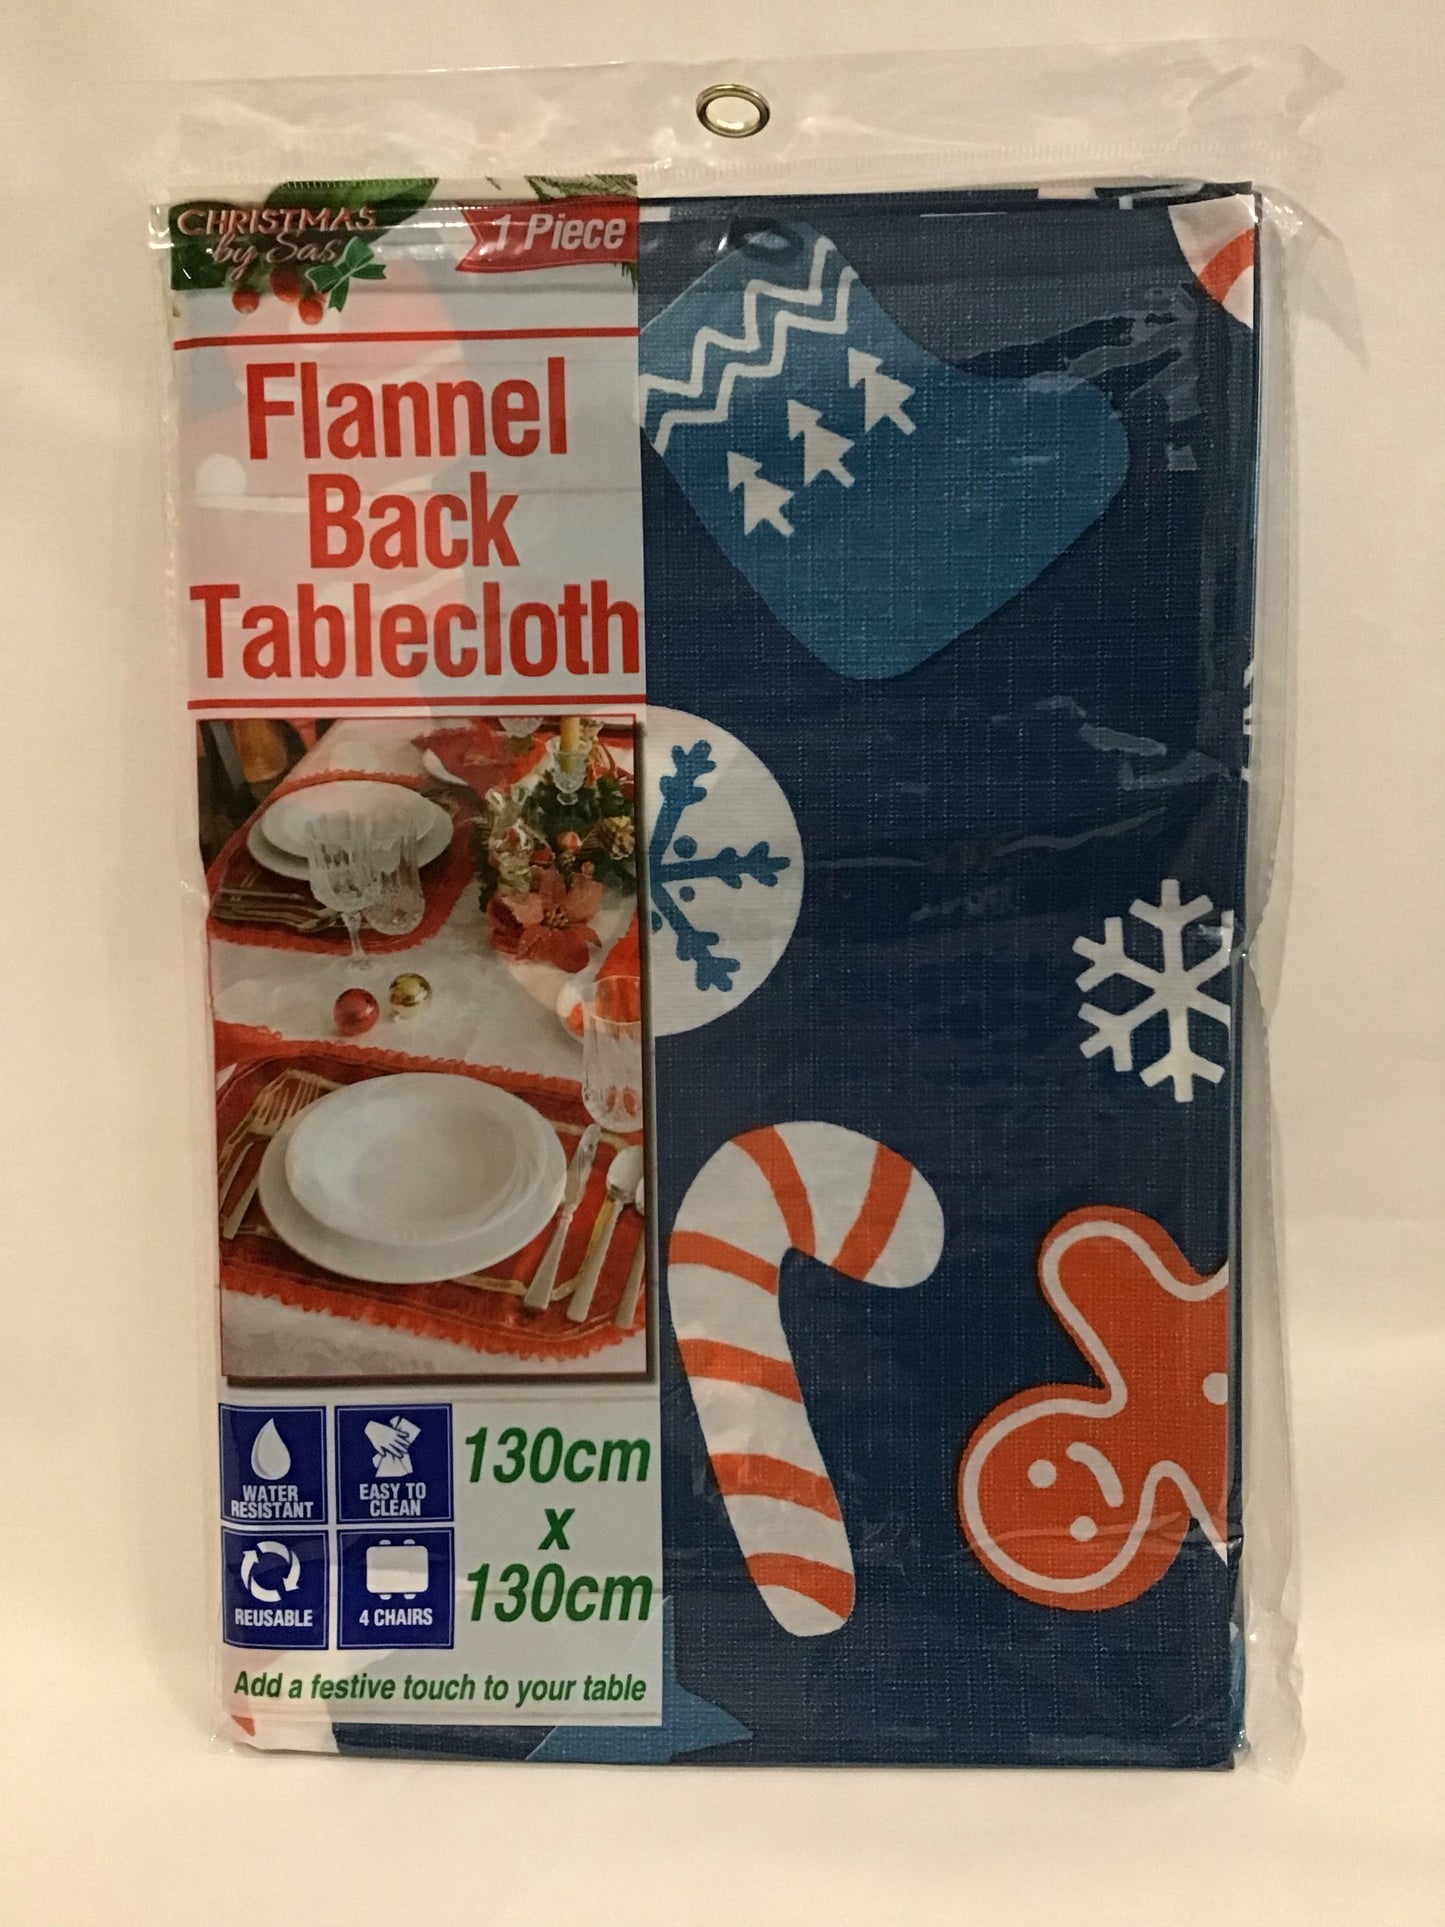 Christmas Flannel Back Table Cloth - 130cm x 130cm - Christmas Theme Design #2